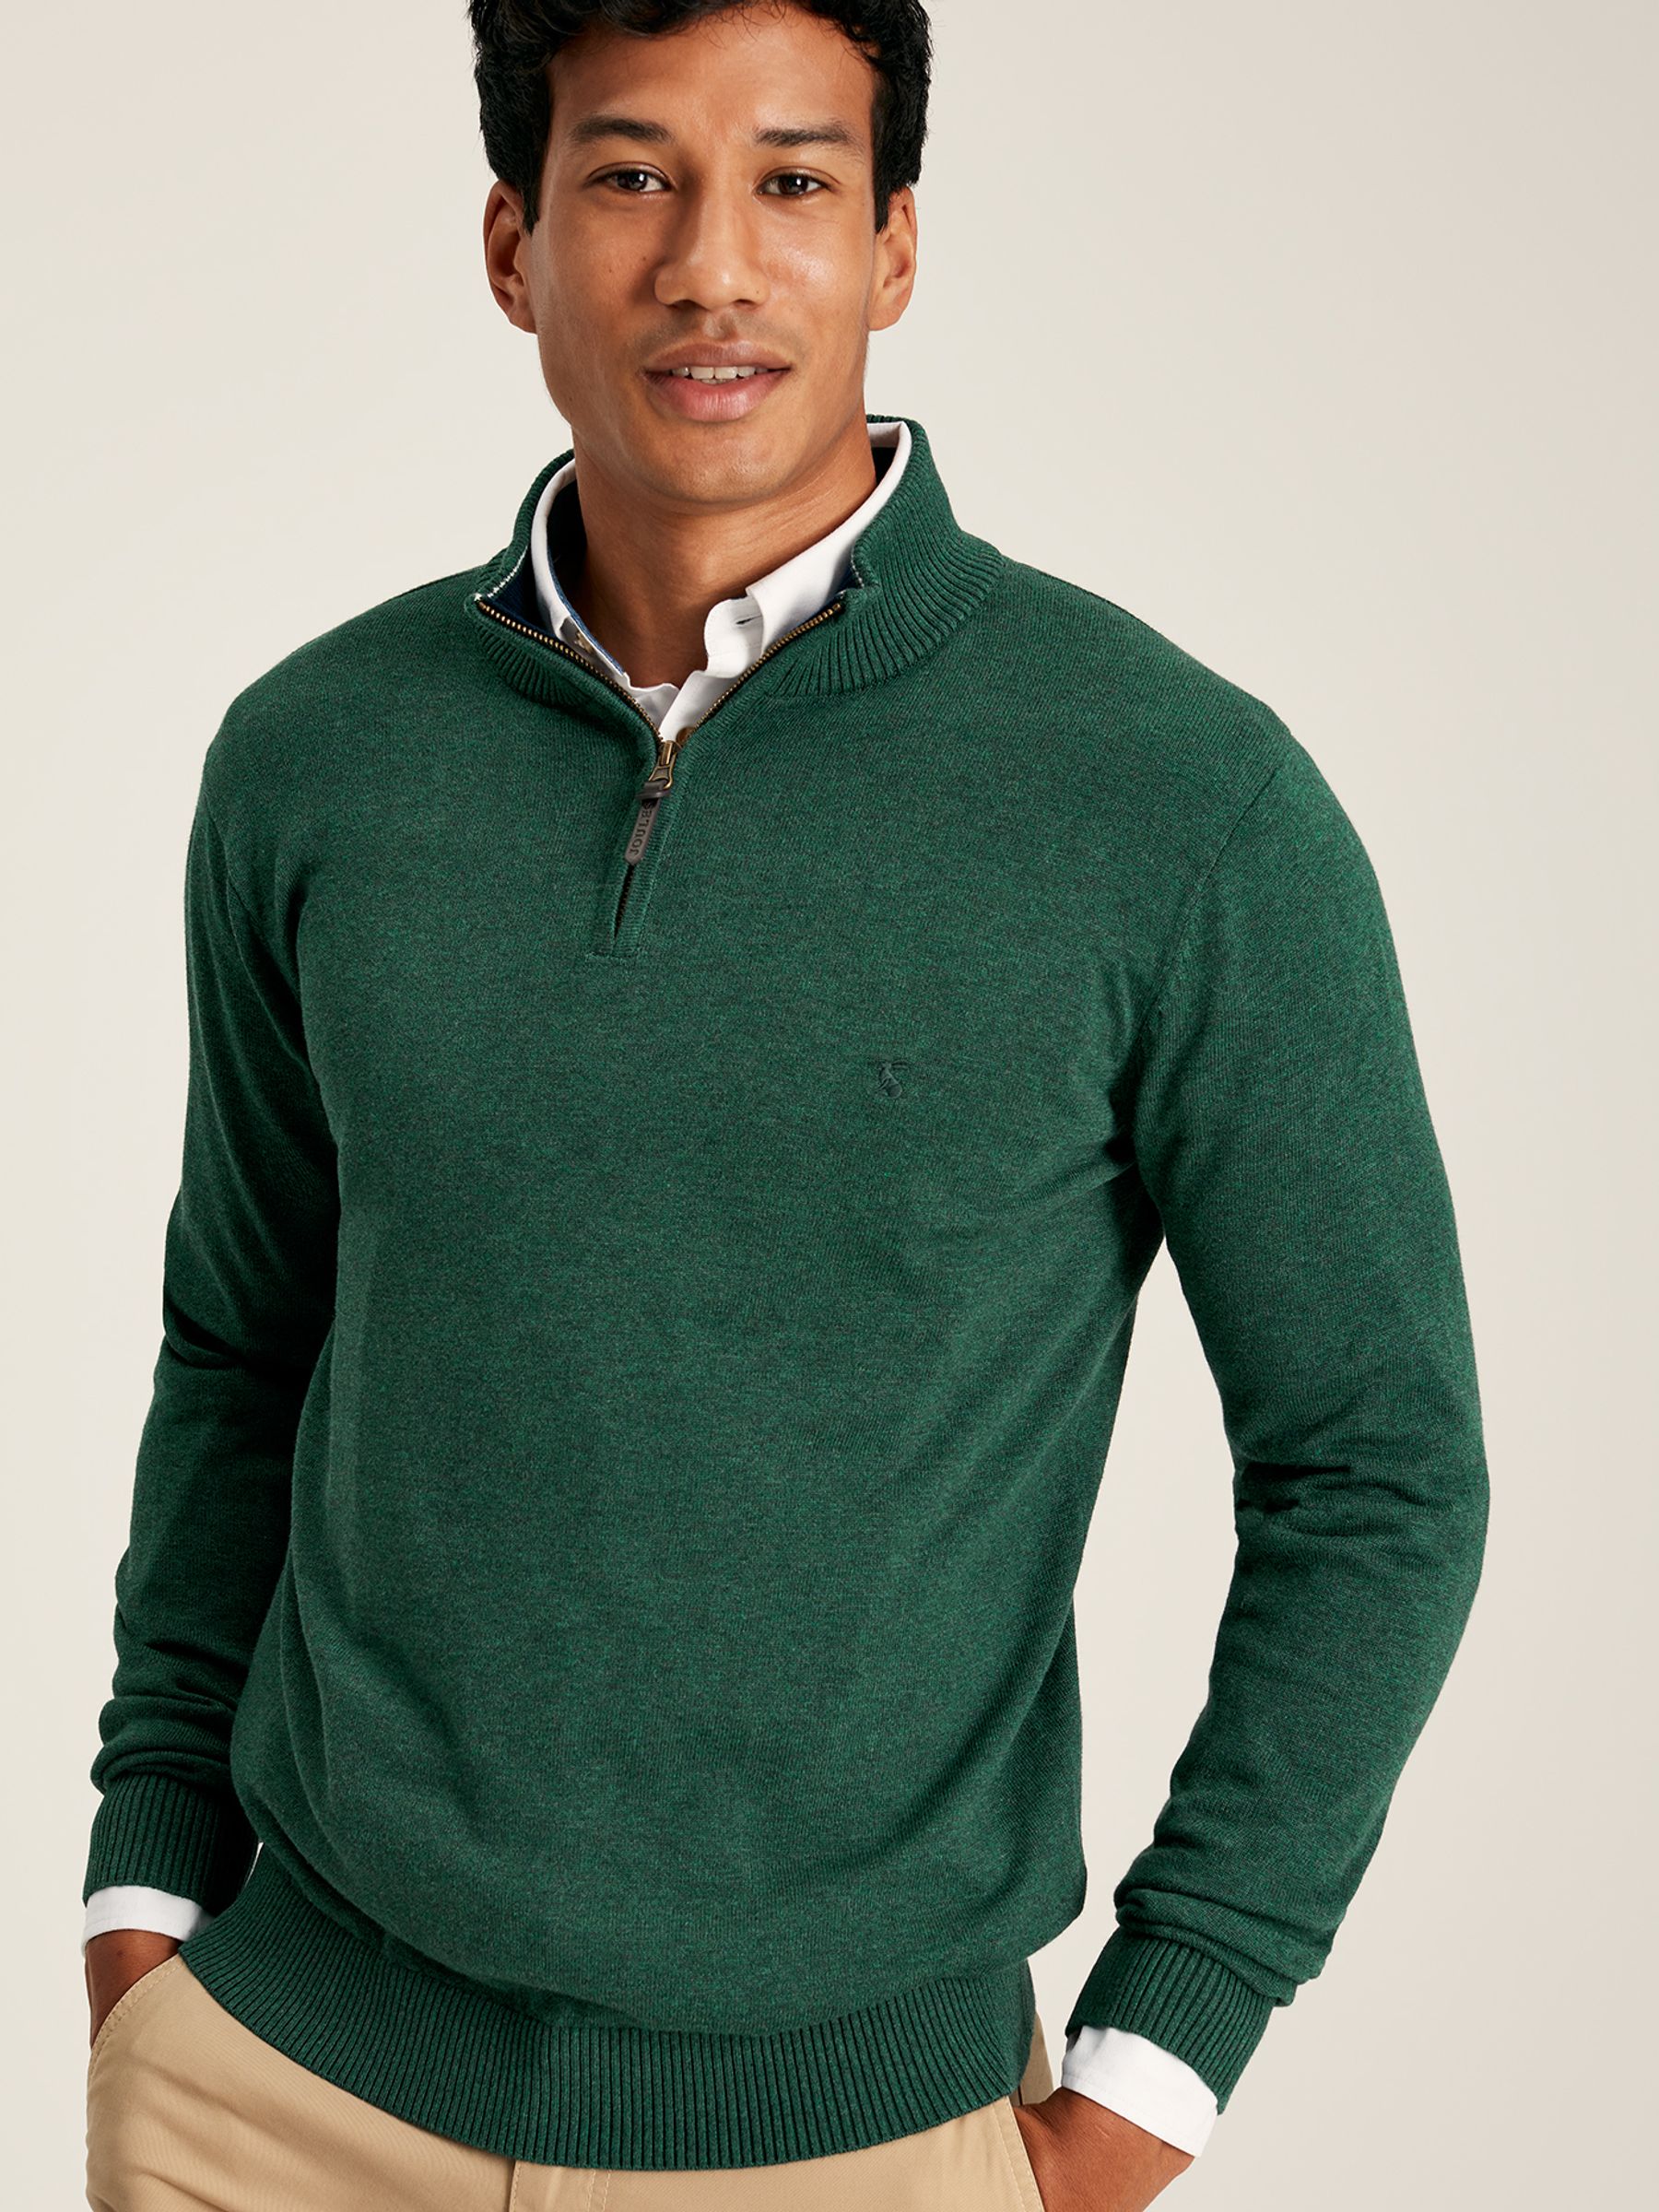 Buy Hillside Green Knitted Quarter Zip Jumper from the Joules online shop